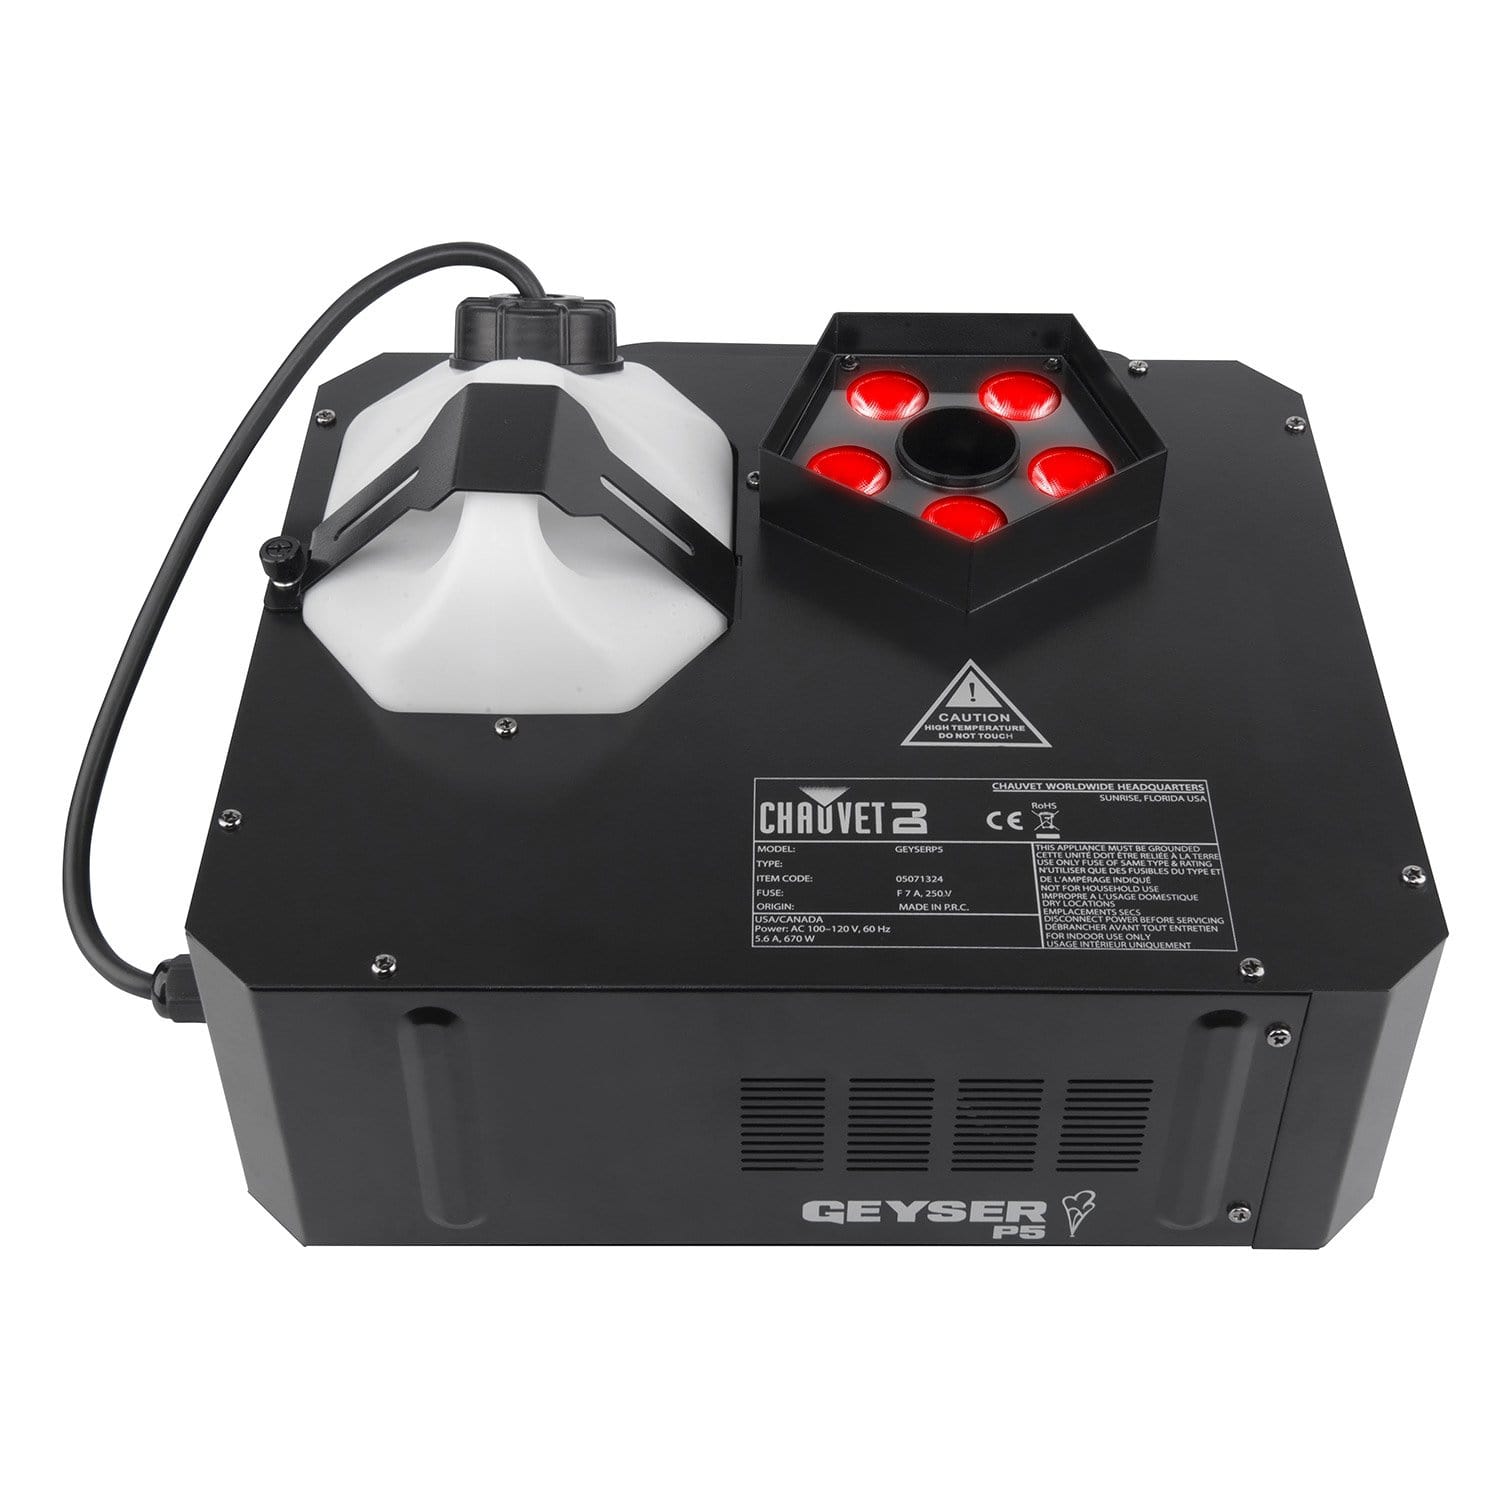 Chauvet Geyser P5 Water Based Fog Machine with FX Light - ProSound and Stage Lighting